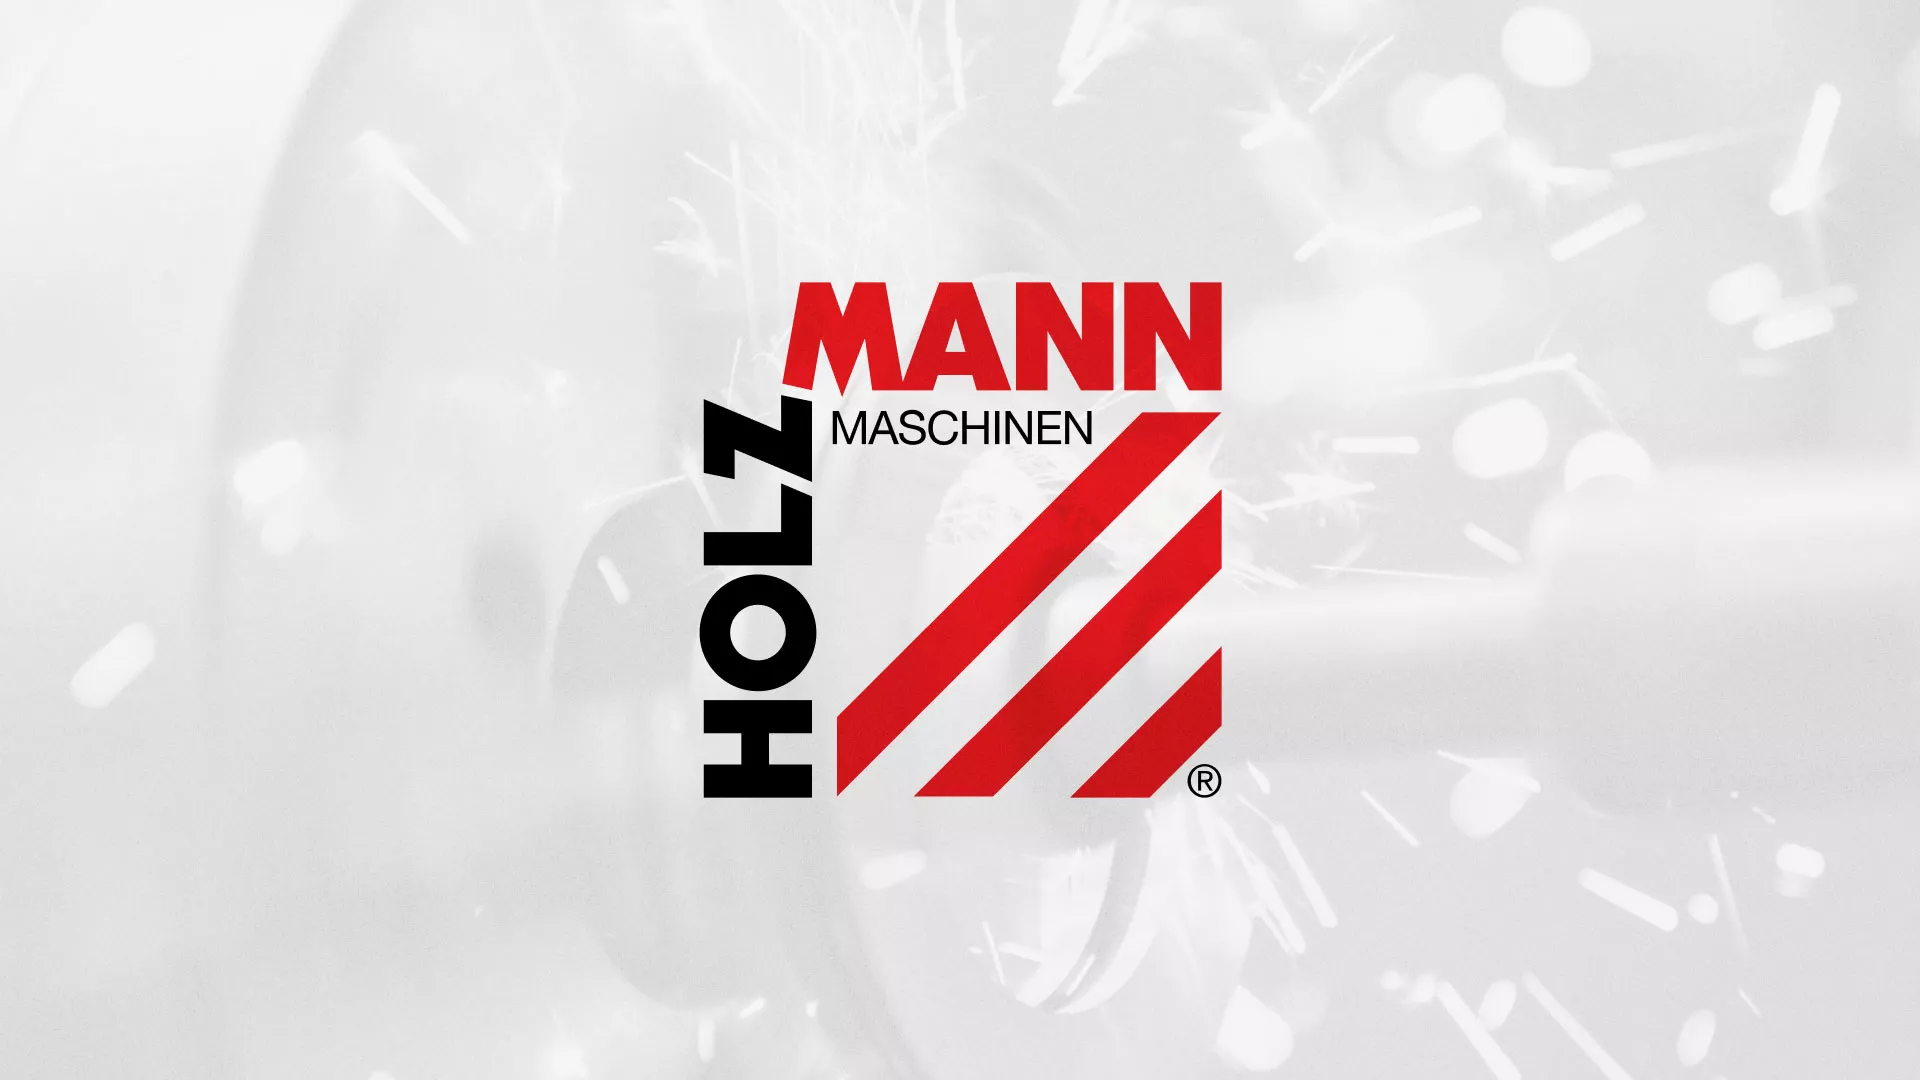 Создание сайта компании «HOLZMANN Maschinen GmbH» в Махачкале